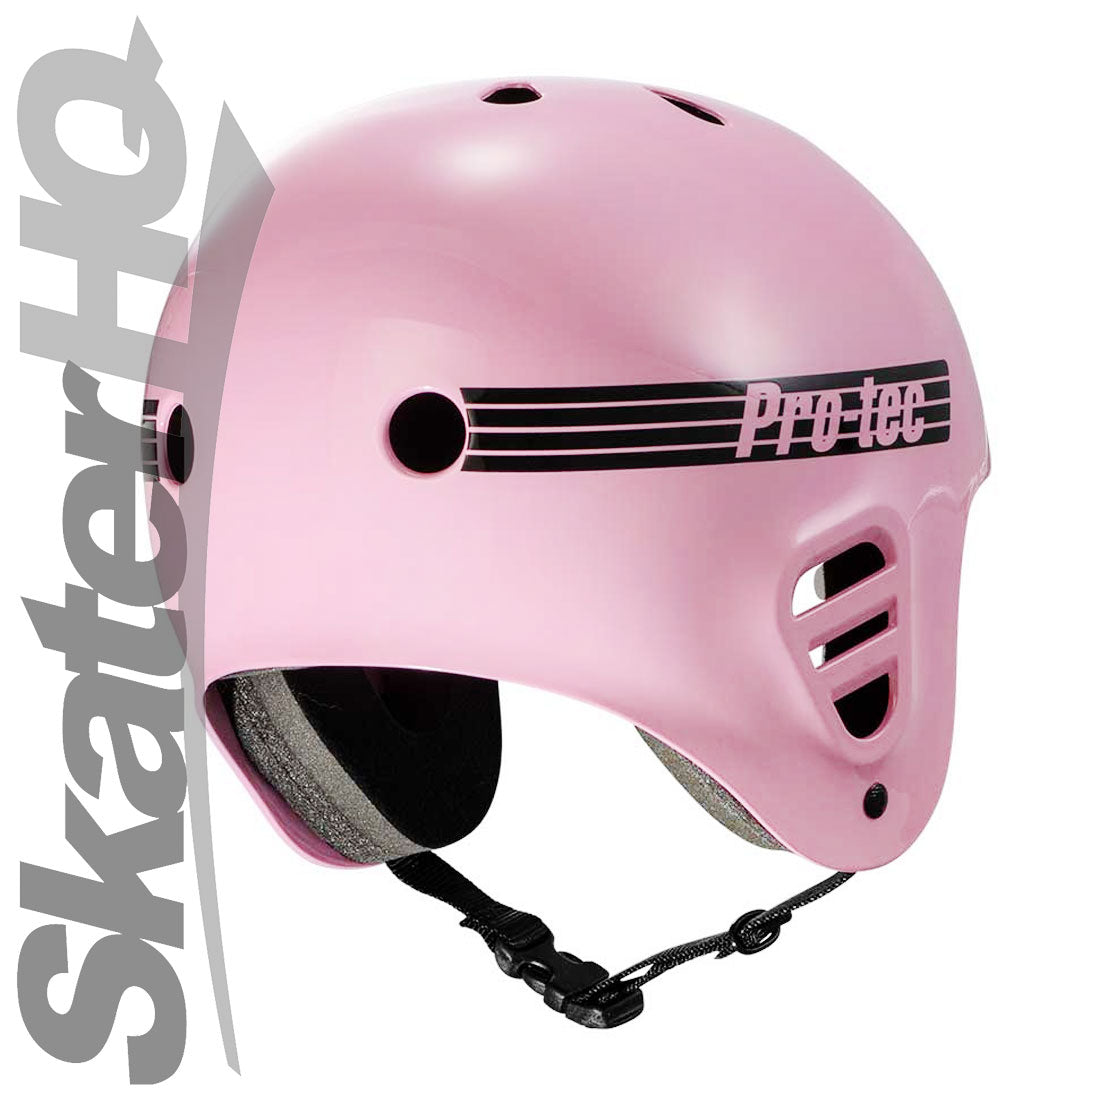 Pro-Tec Full Cut Skate - Gloss Pink Helmets